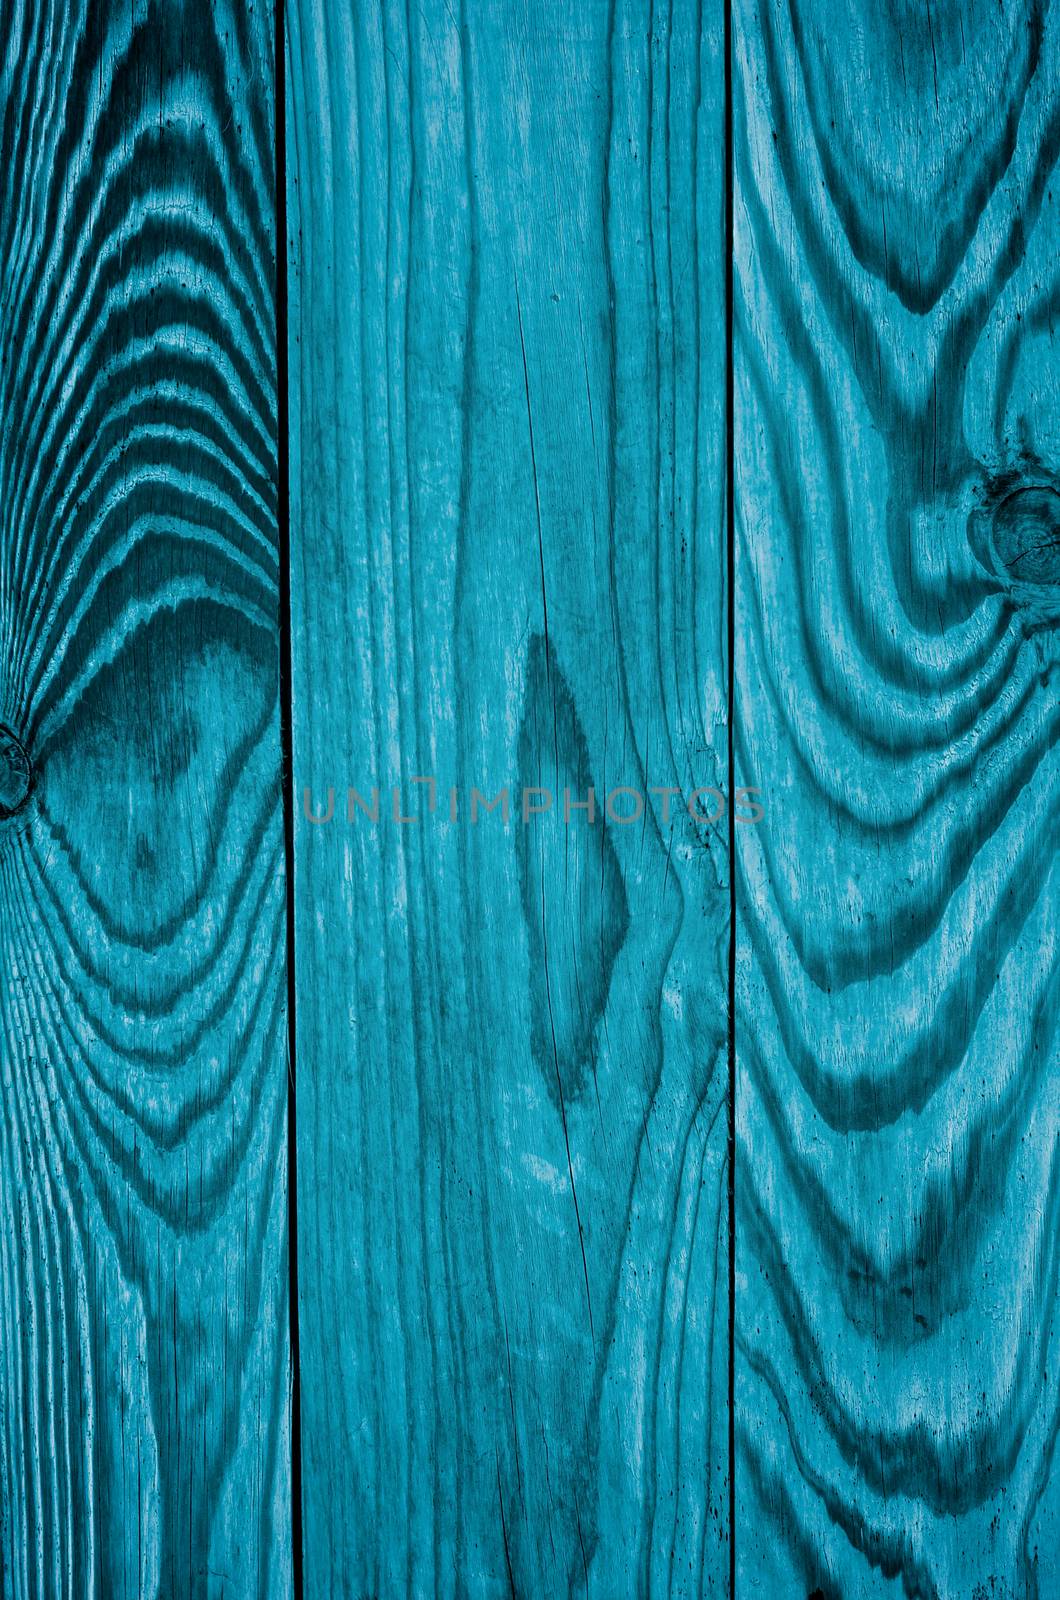 Wooden Background by zhekos